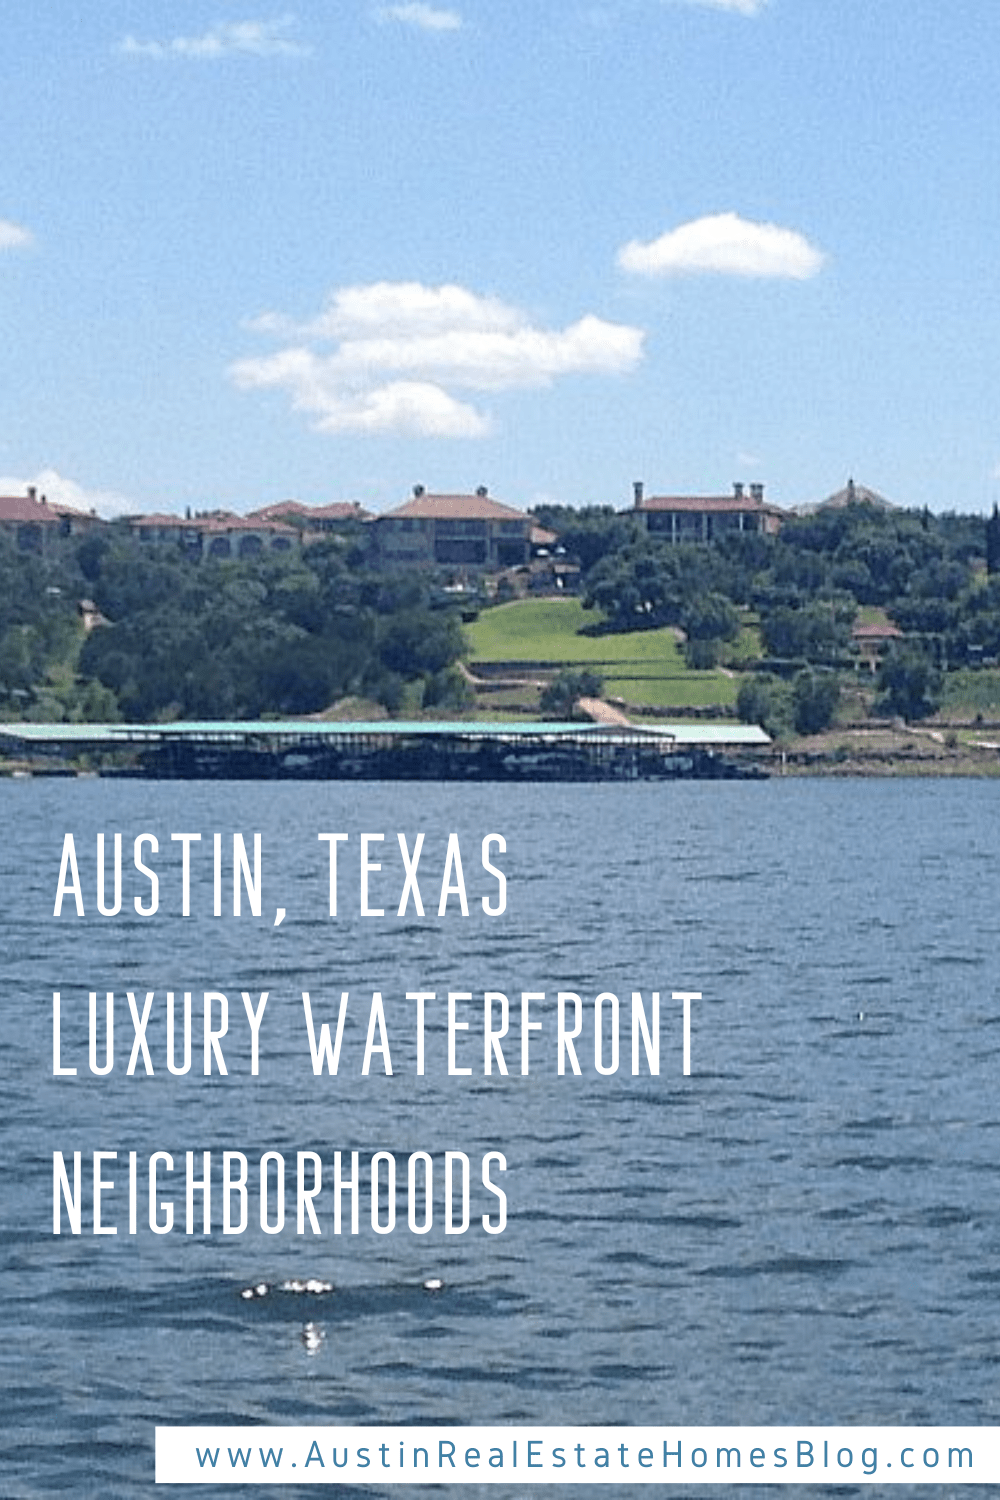 Austin Texas luxury waterfront neighborhoods